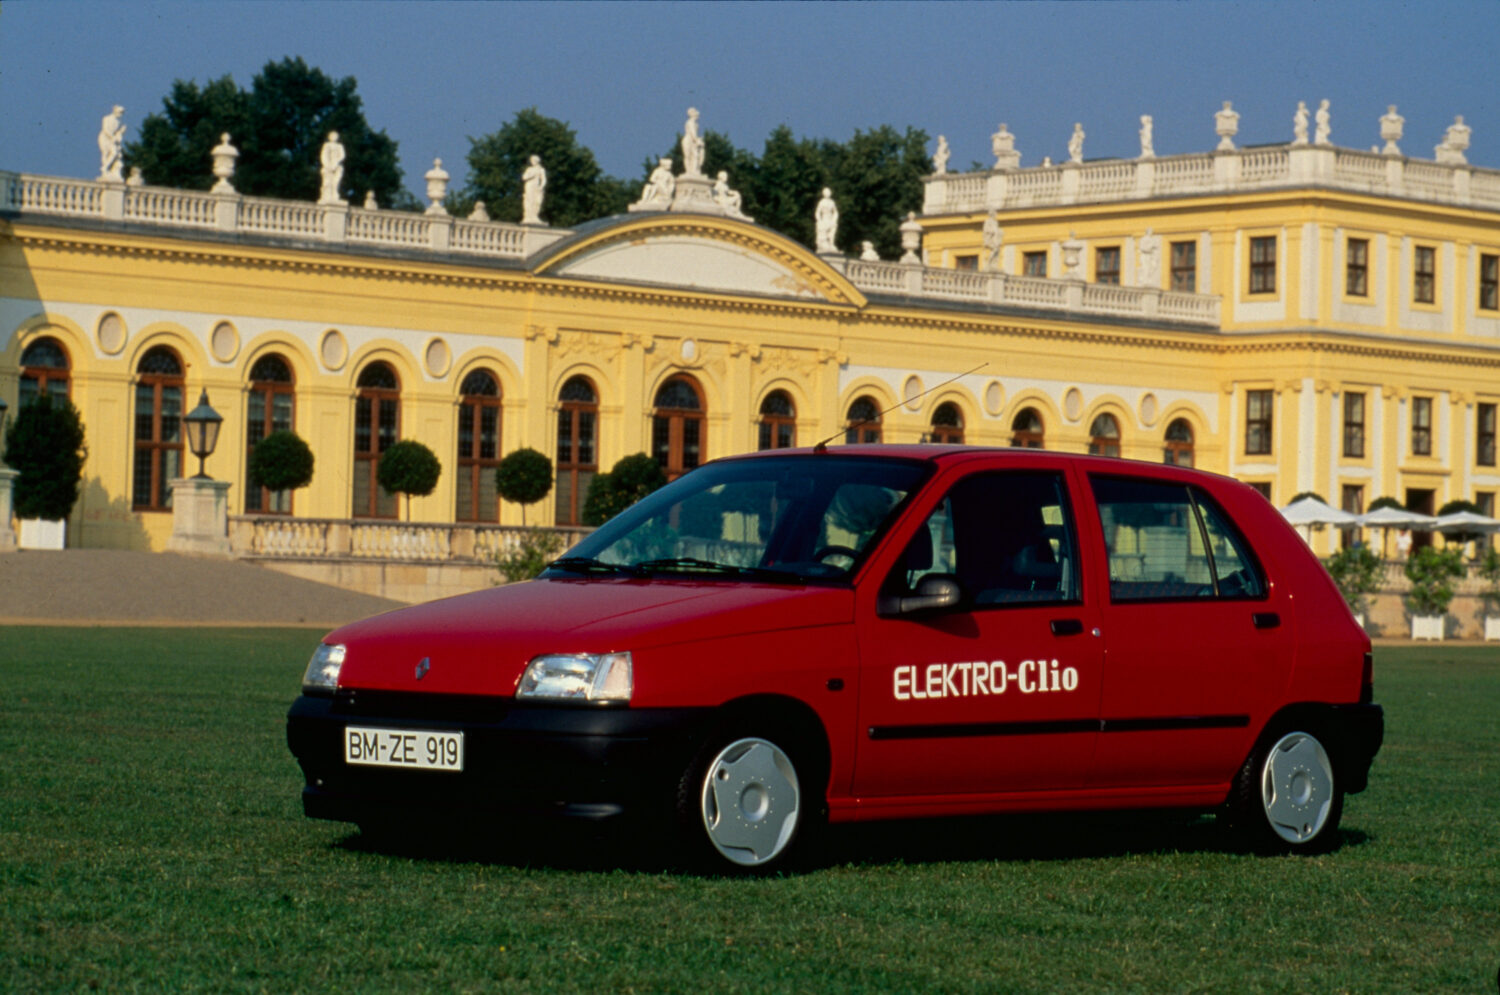 2020 - 30 ans de Renault CLIO - Renault CLIO (1990-1999)